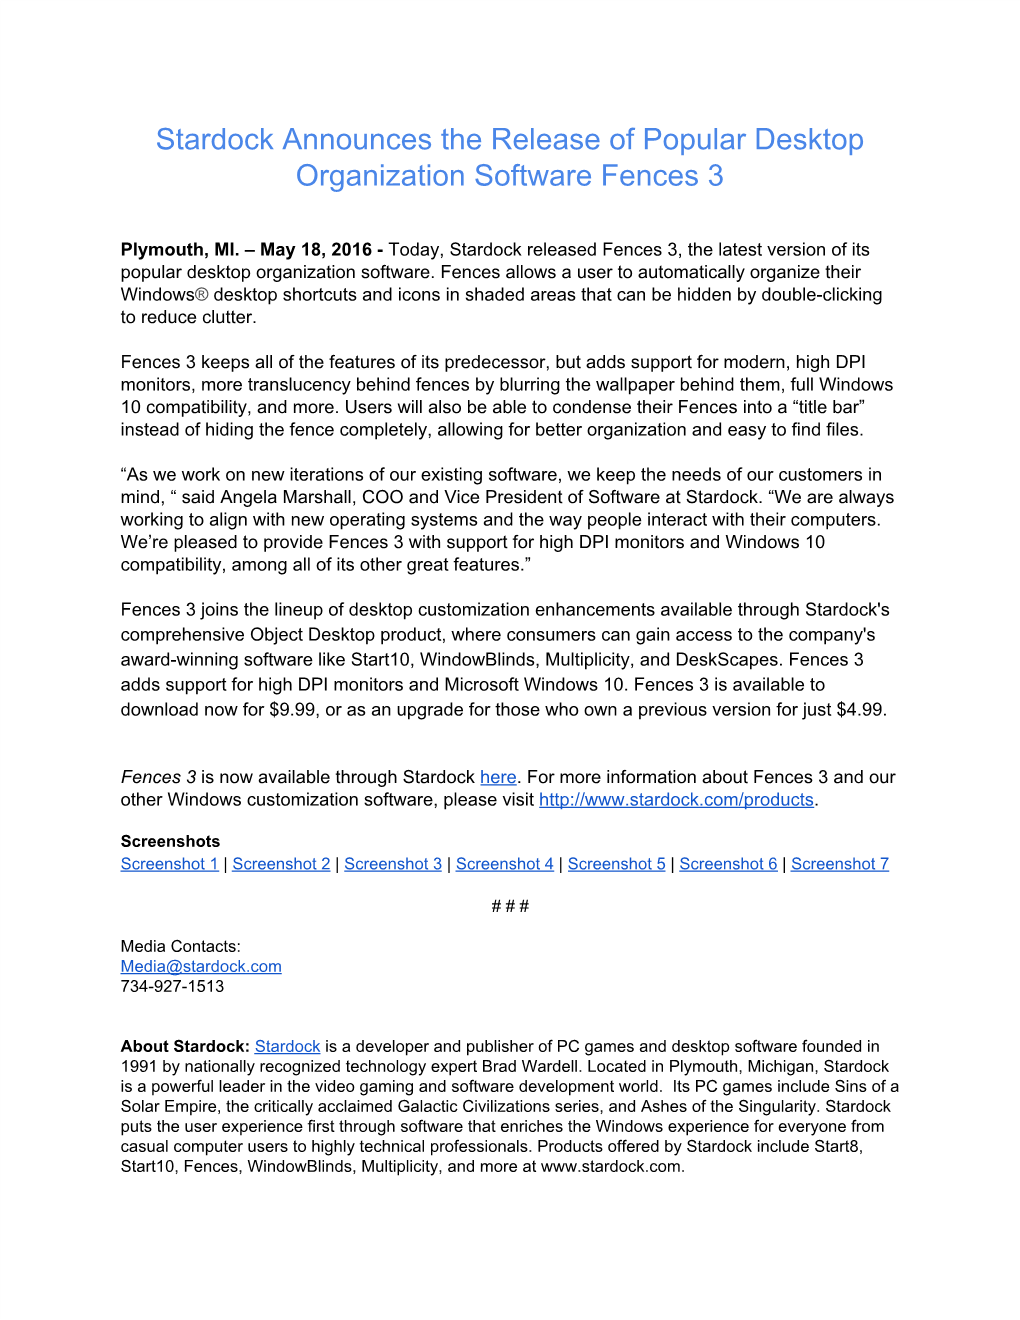 Stardock Announces the Release of Popular Desktop Organization Software Fences 3